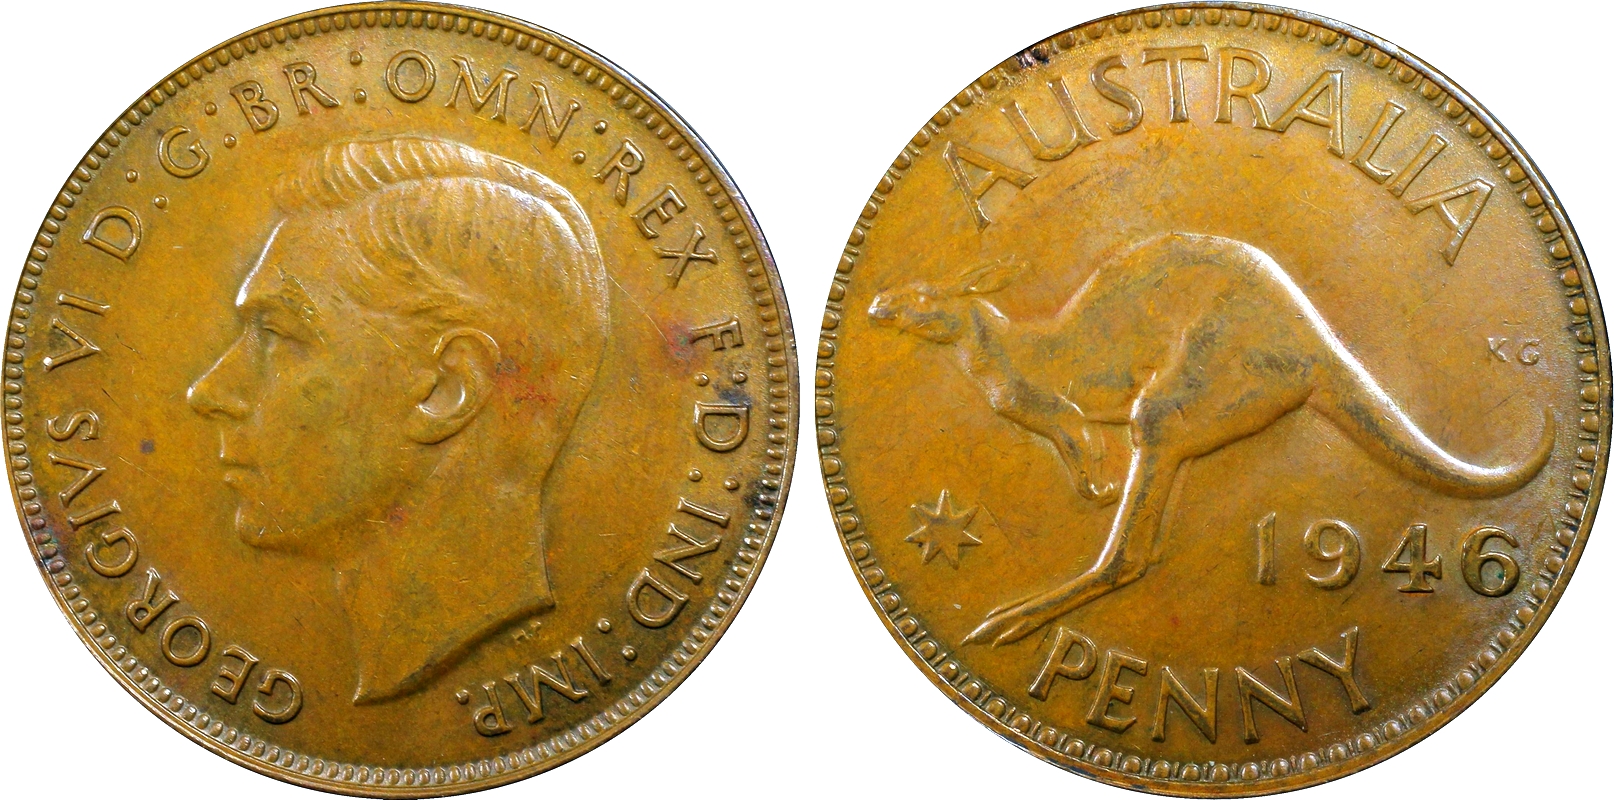 1946 Australian Penny, PCGS AU58 'about Uncirculated'